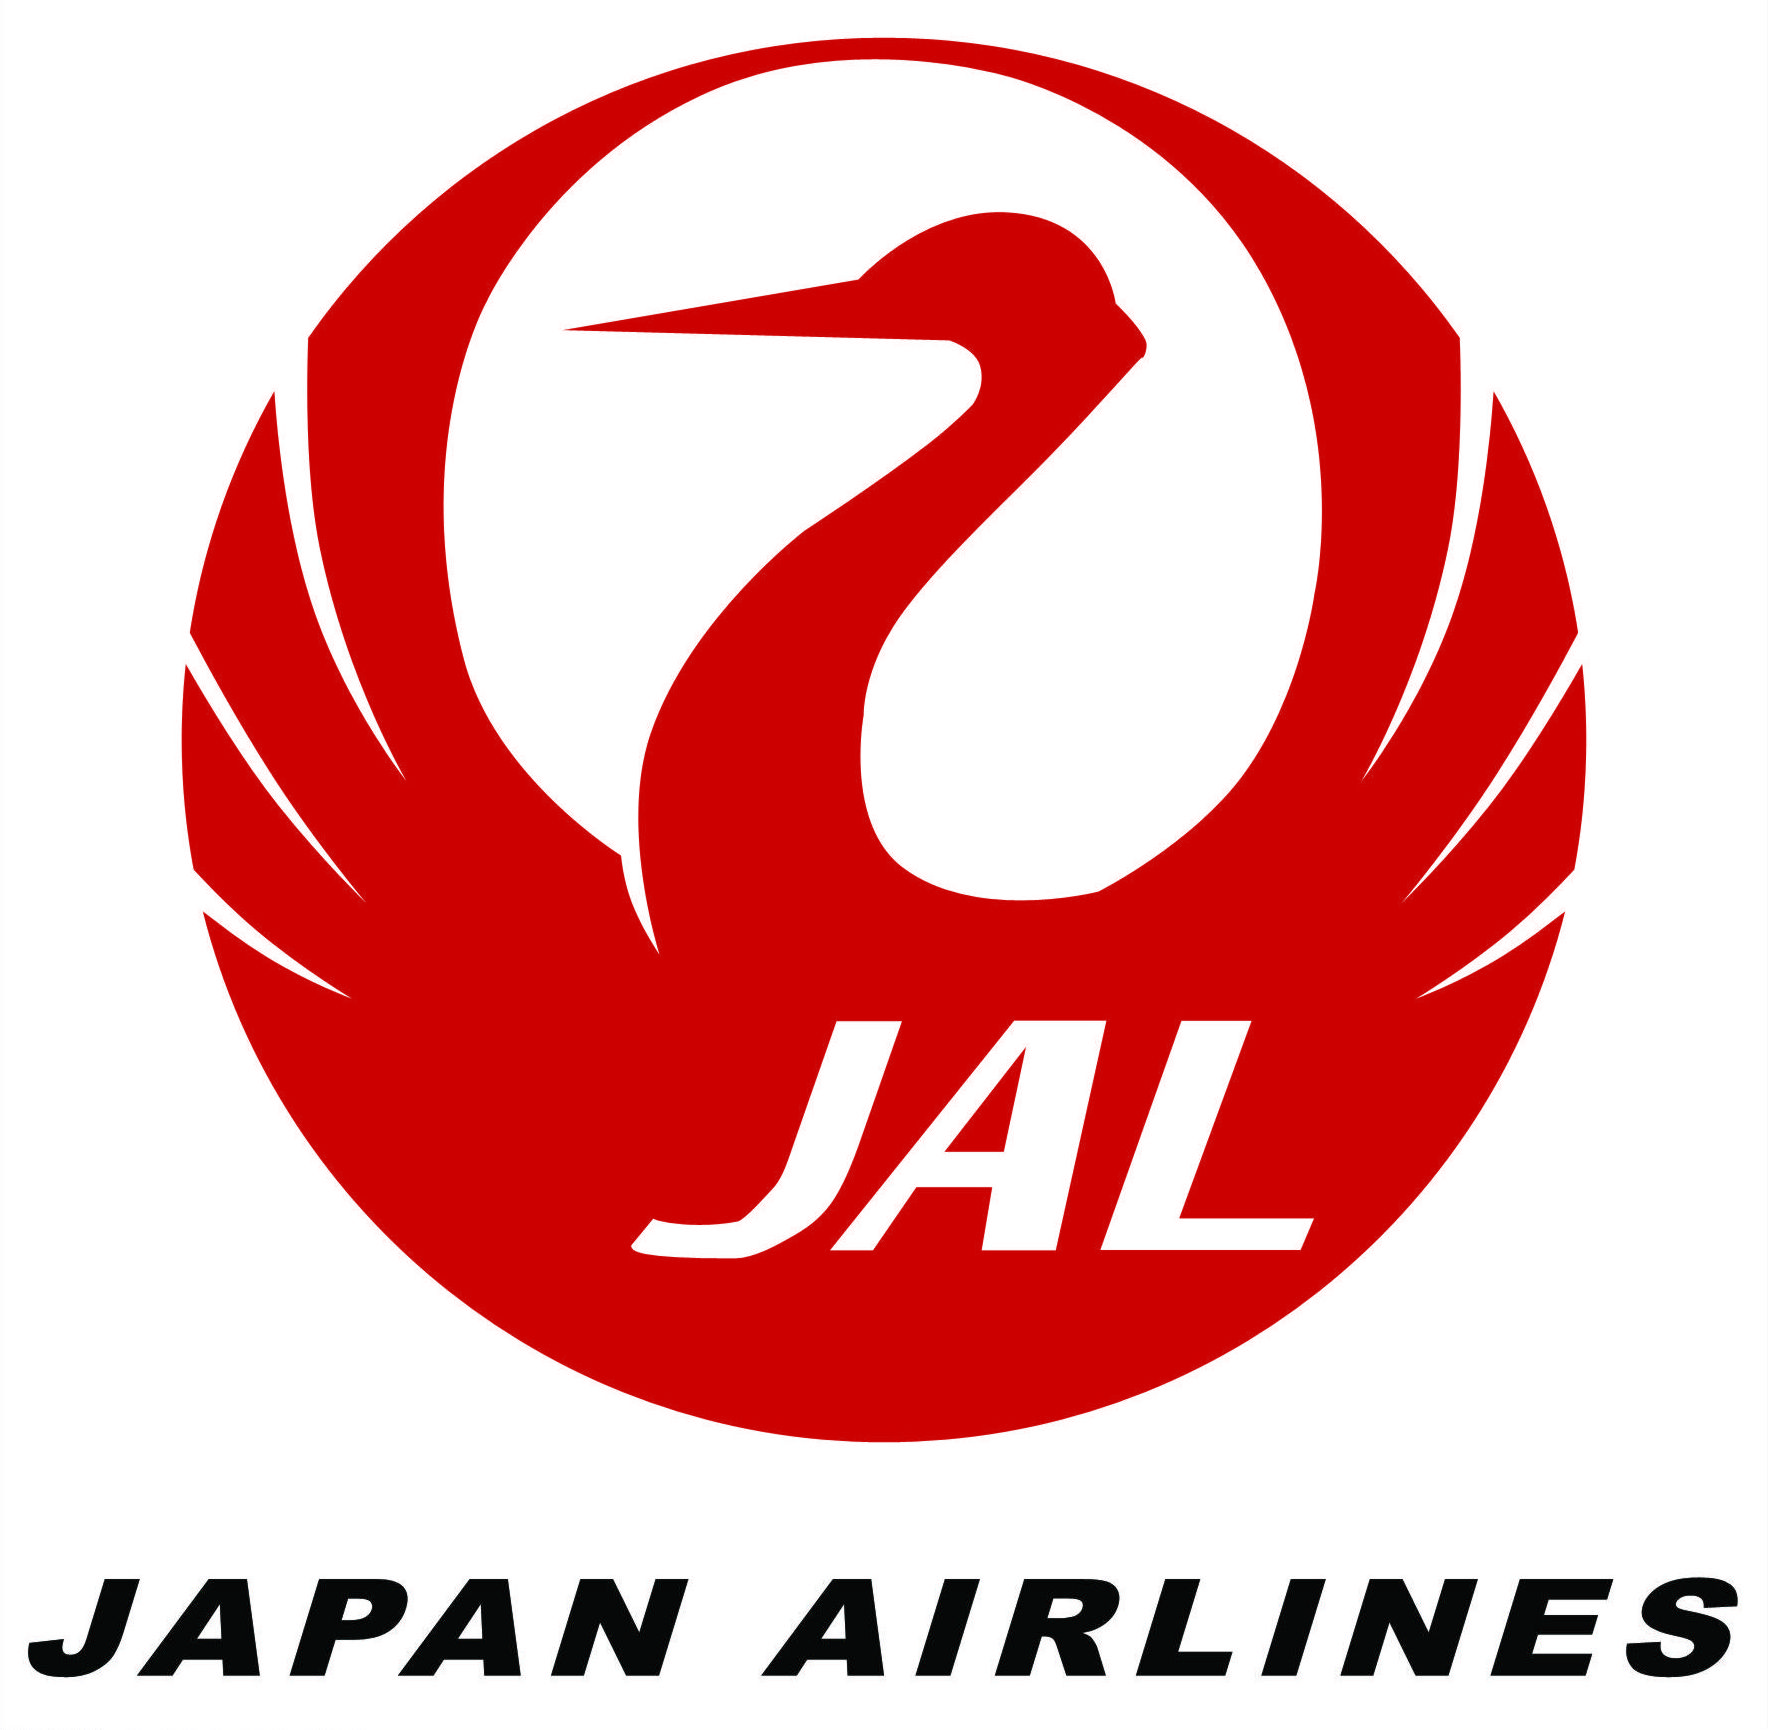 Japan Airlines 2 logos